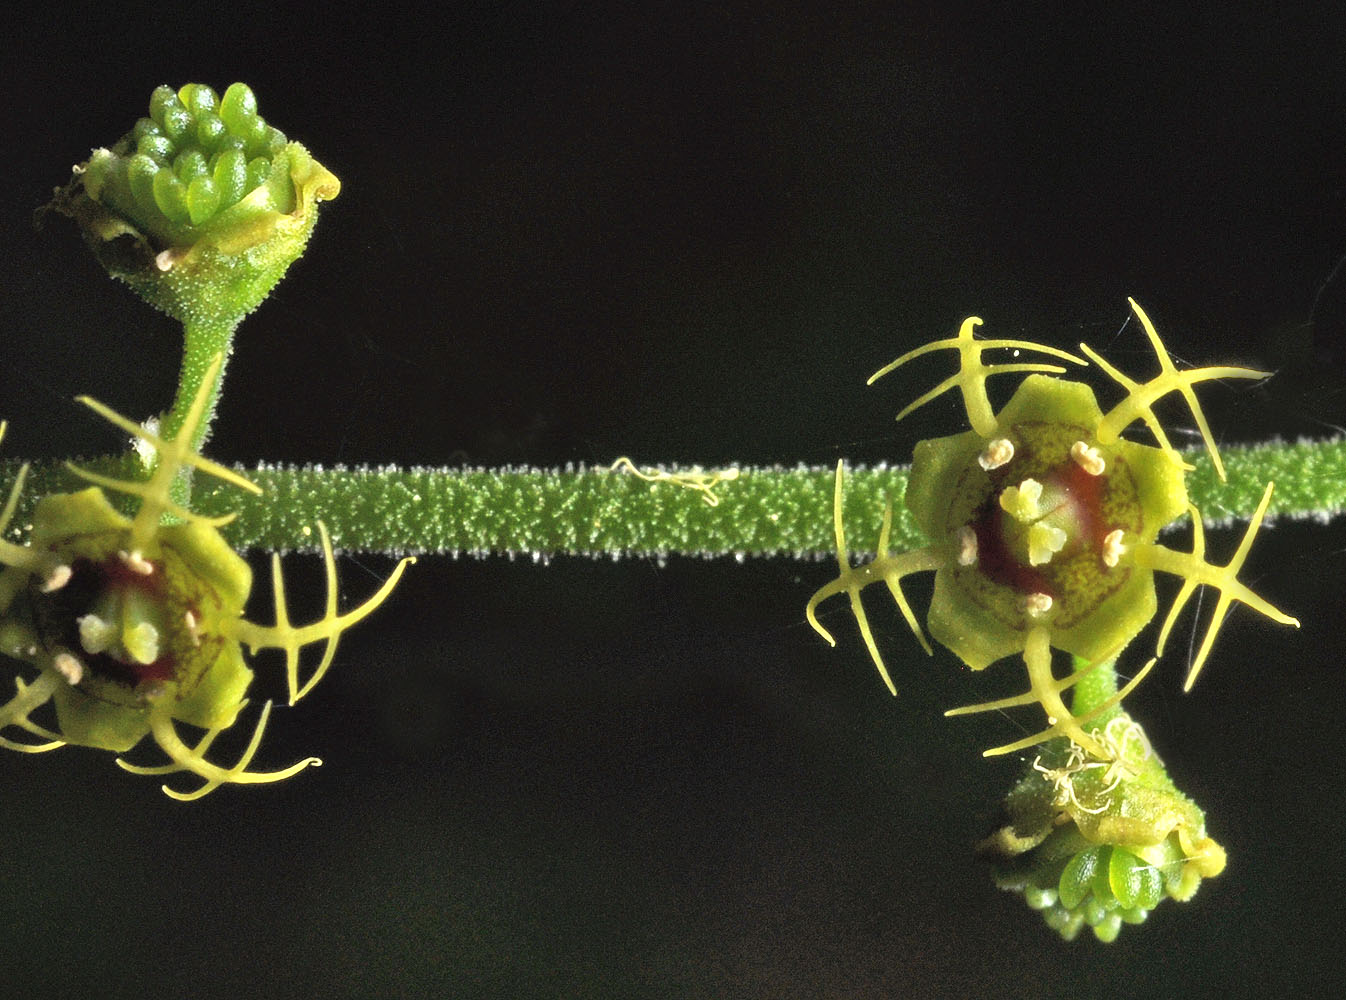 Flora of Eastern Washington Image: Pectiantia pentandra